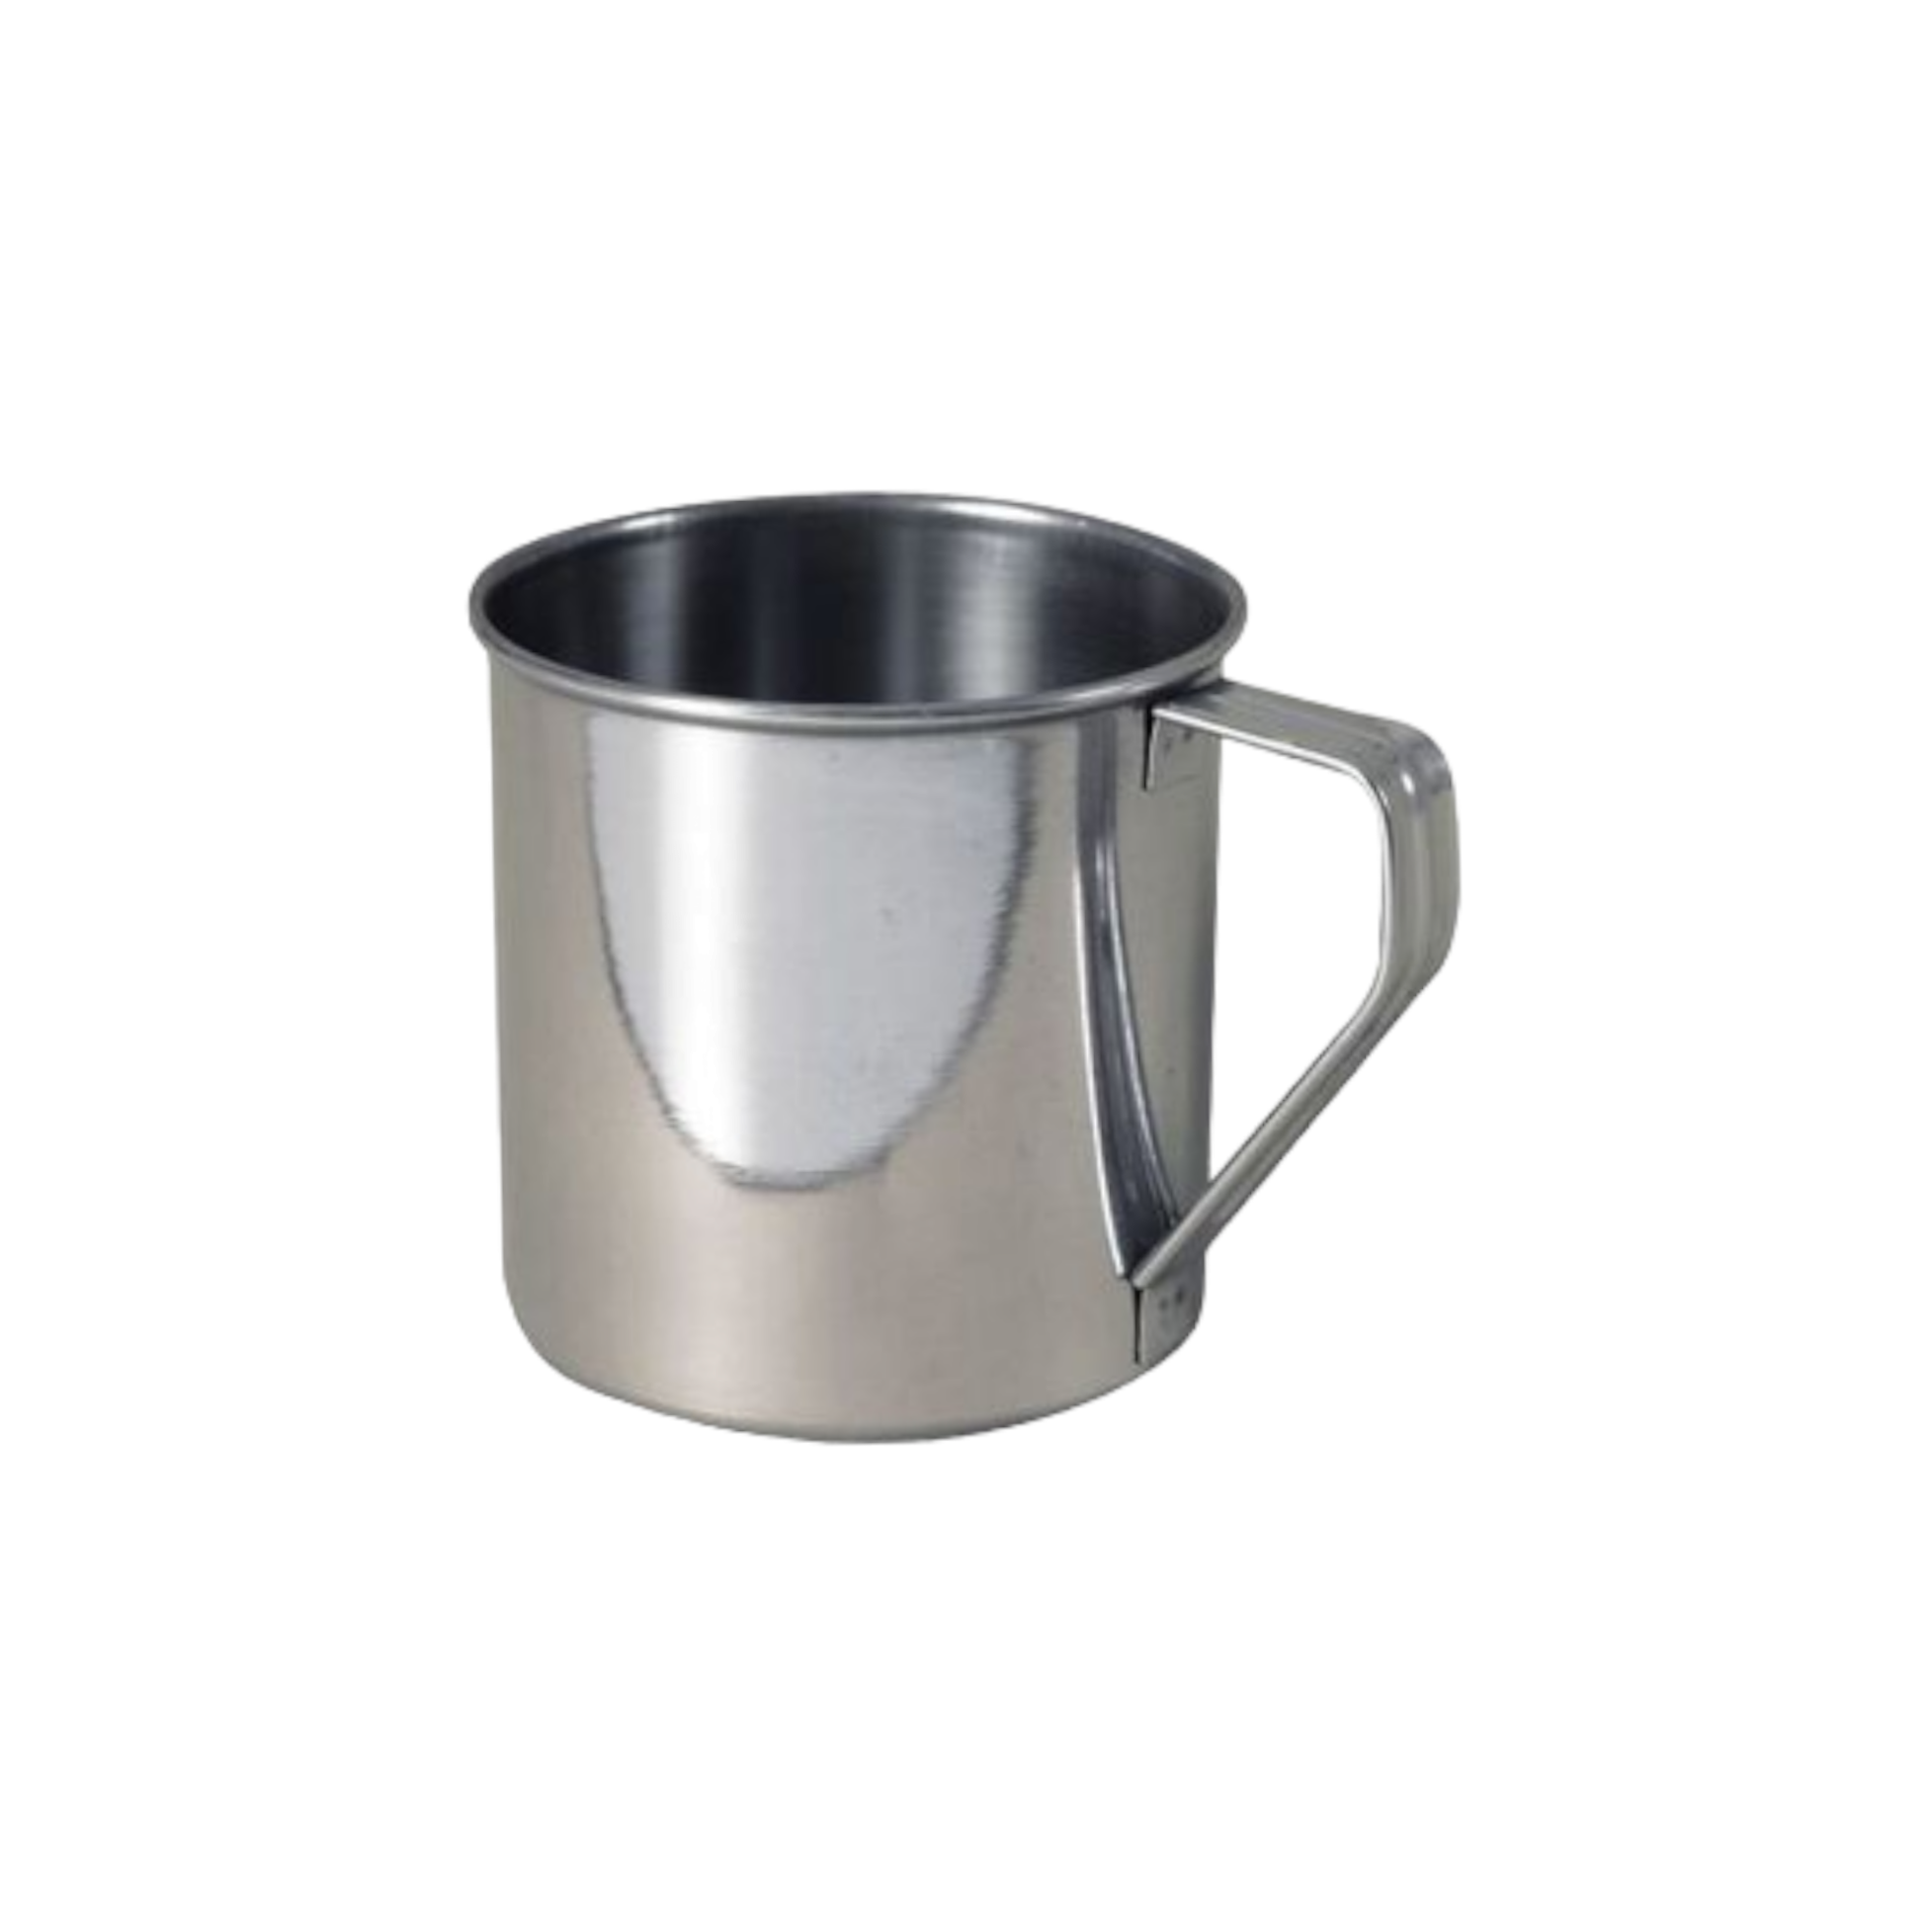 Stainless Steel Mug 200ml 5x7cm Tumbler Cup 8694-1